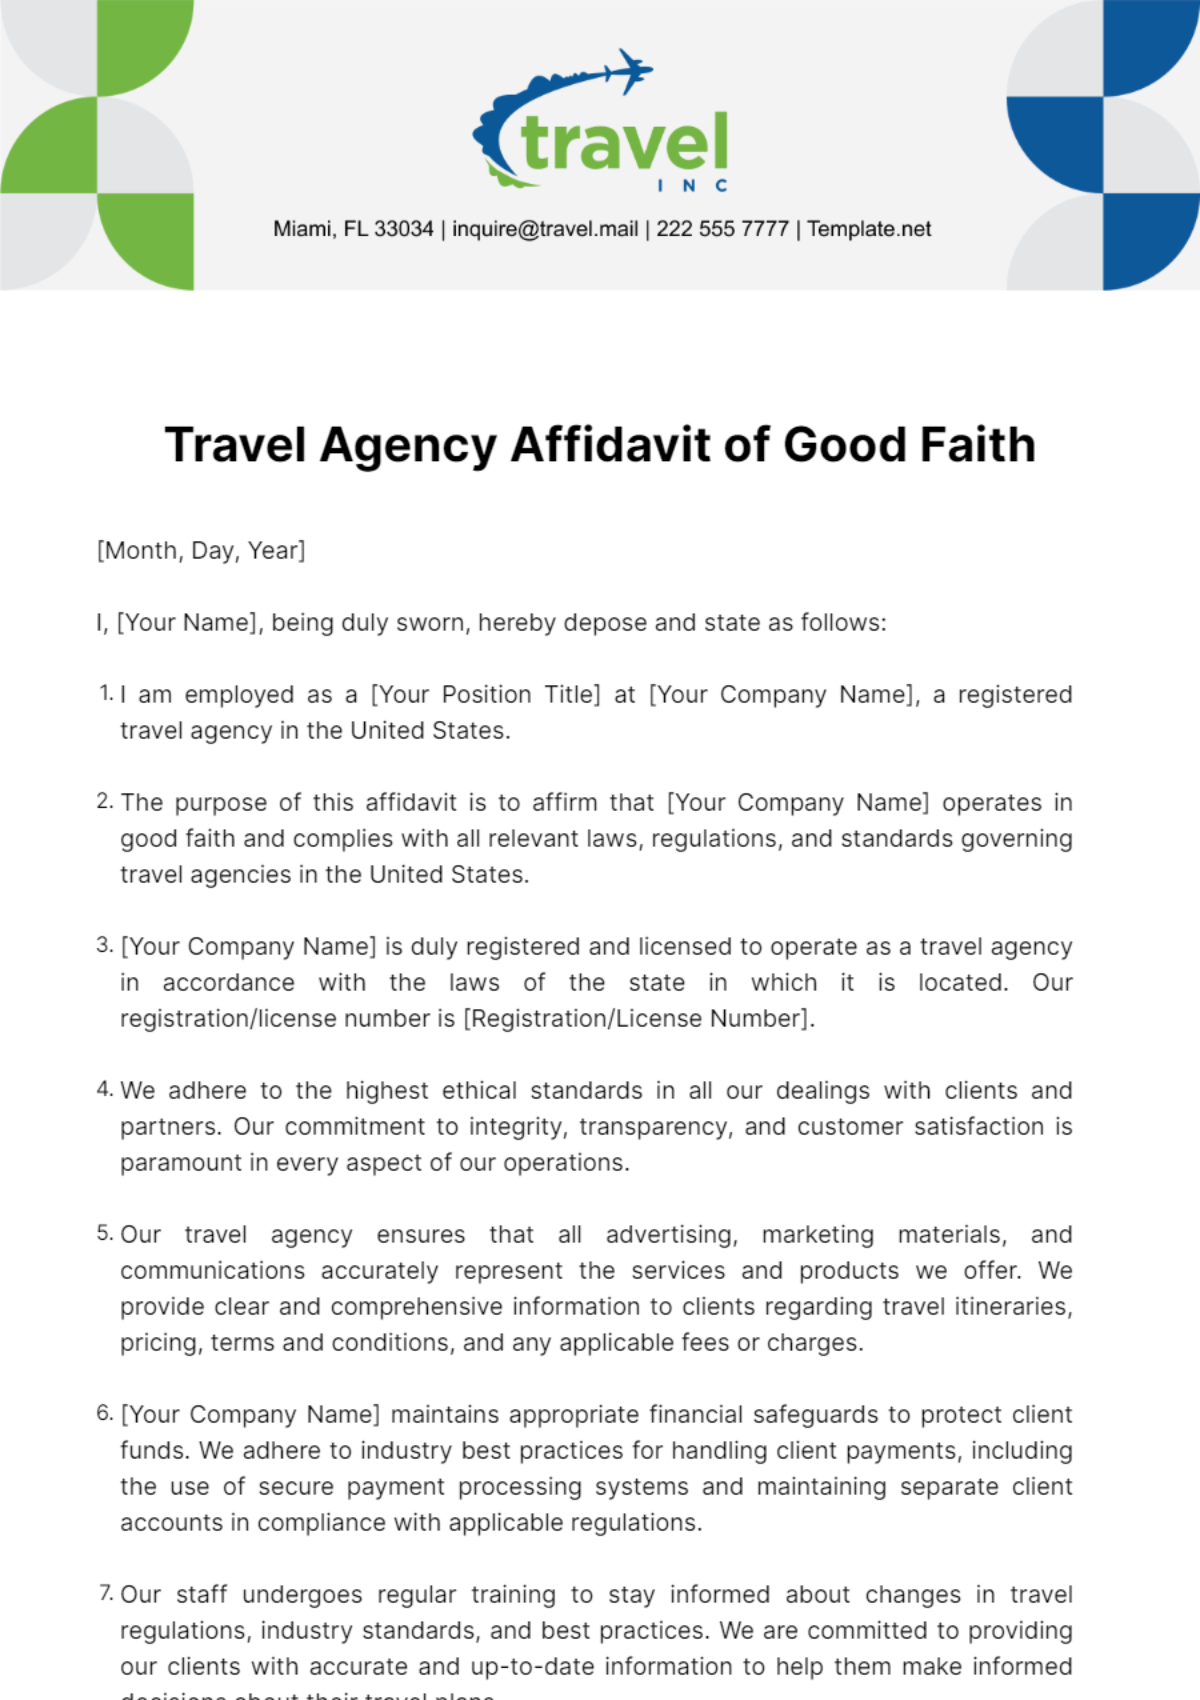 Free Travel Agency Affidavit of Good Faith Template